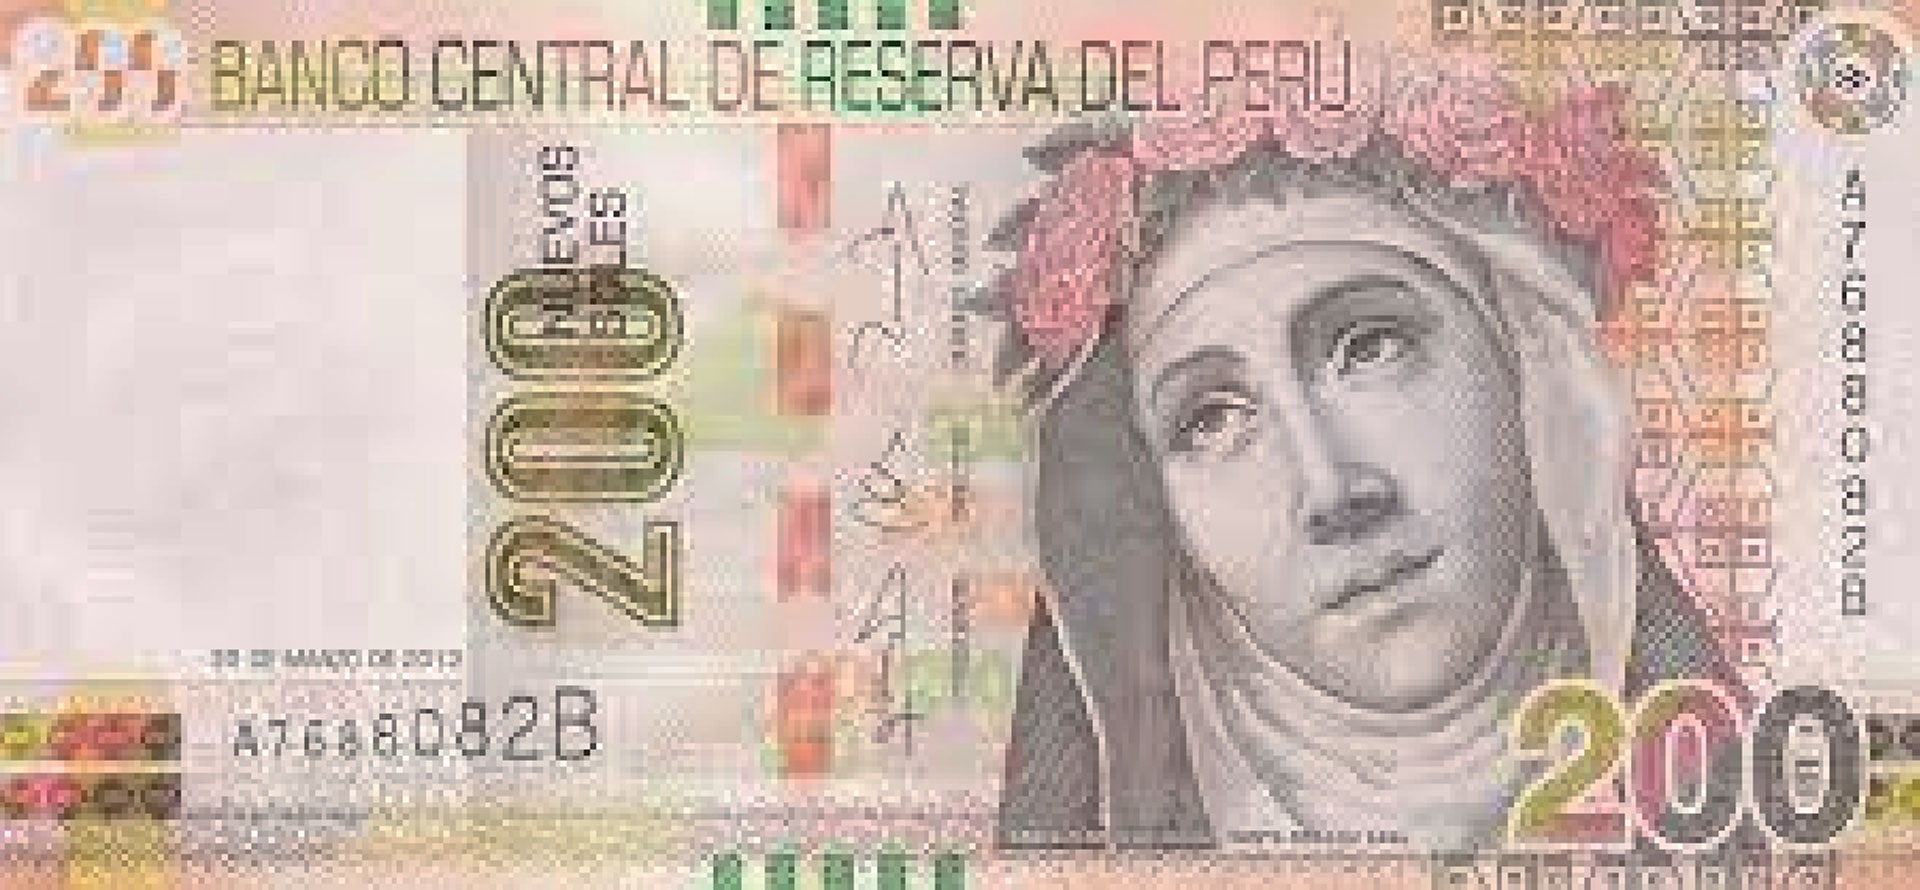 PERÚ Sol Peruano: S 200 = USD 52.33 USD1 = S 3.82